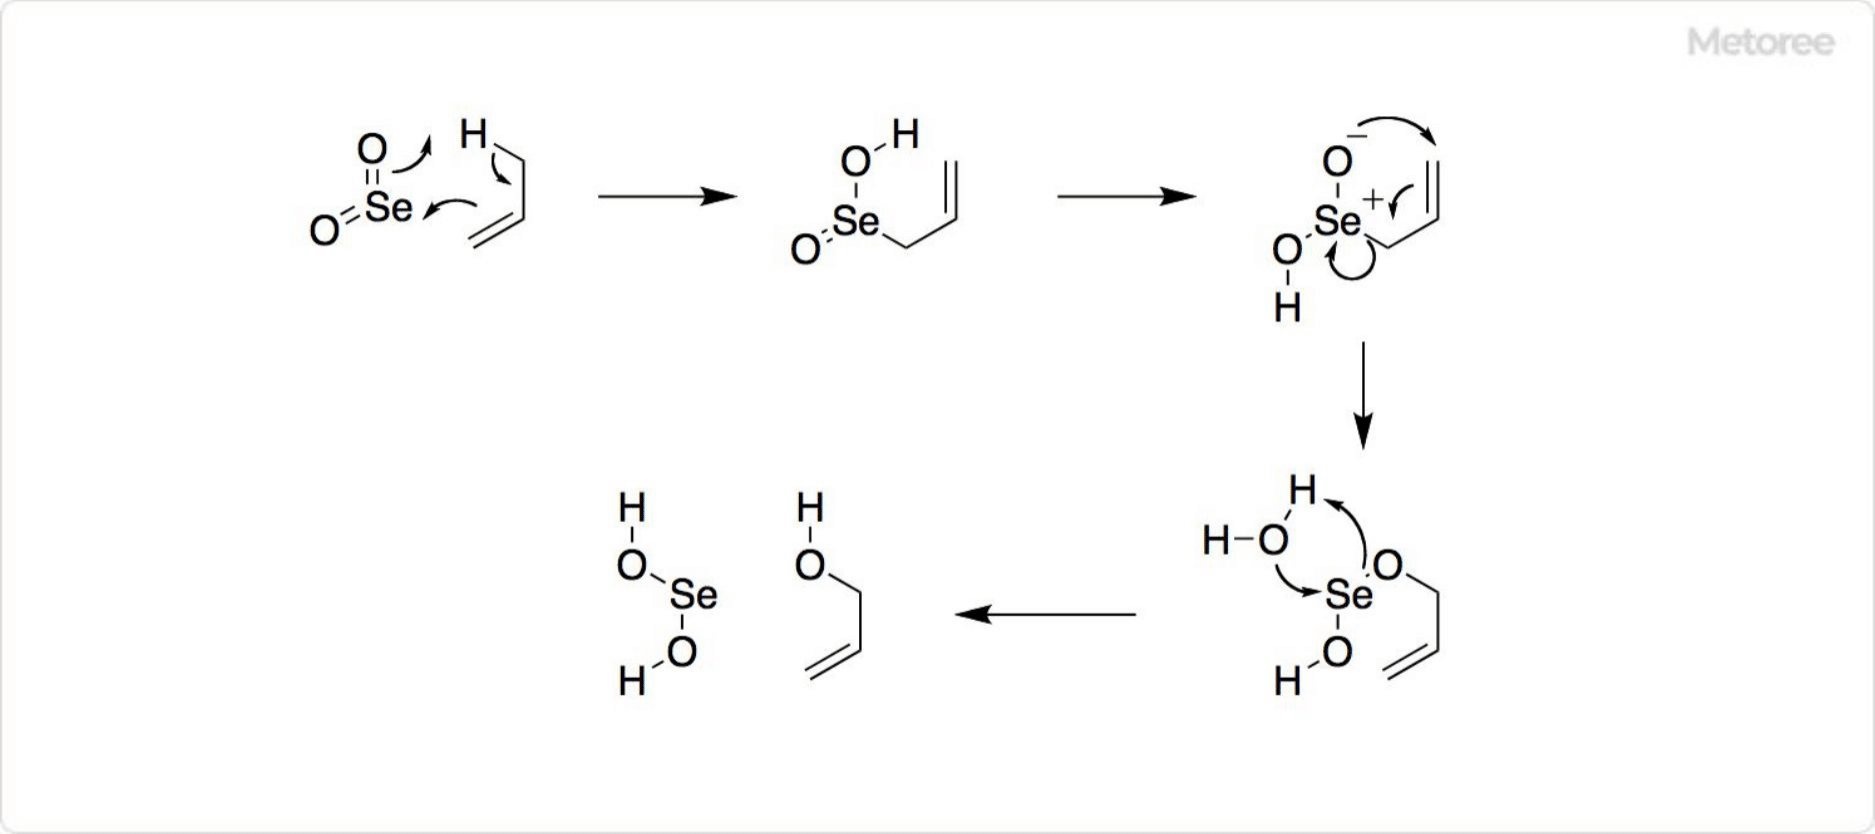 Figure 3. Reaction using Selenium Dioxide